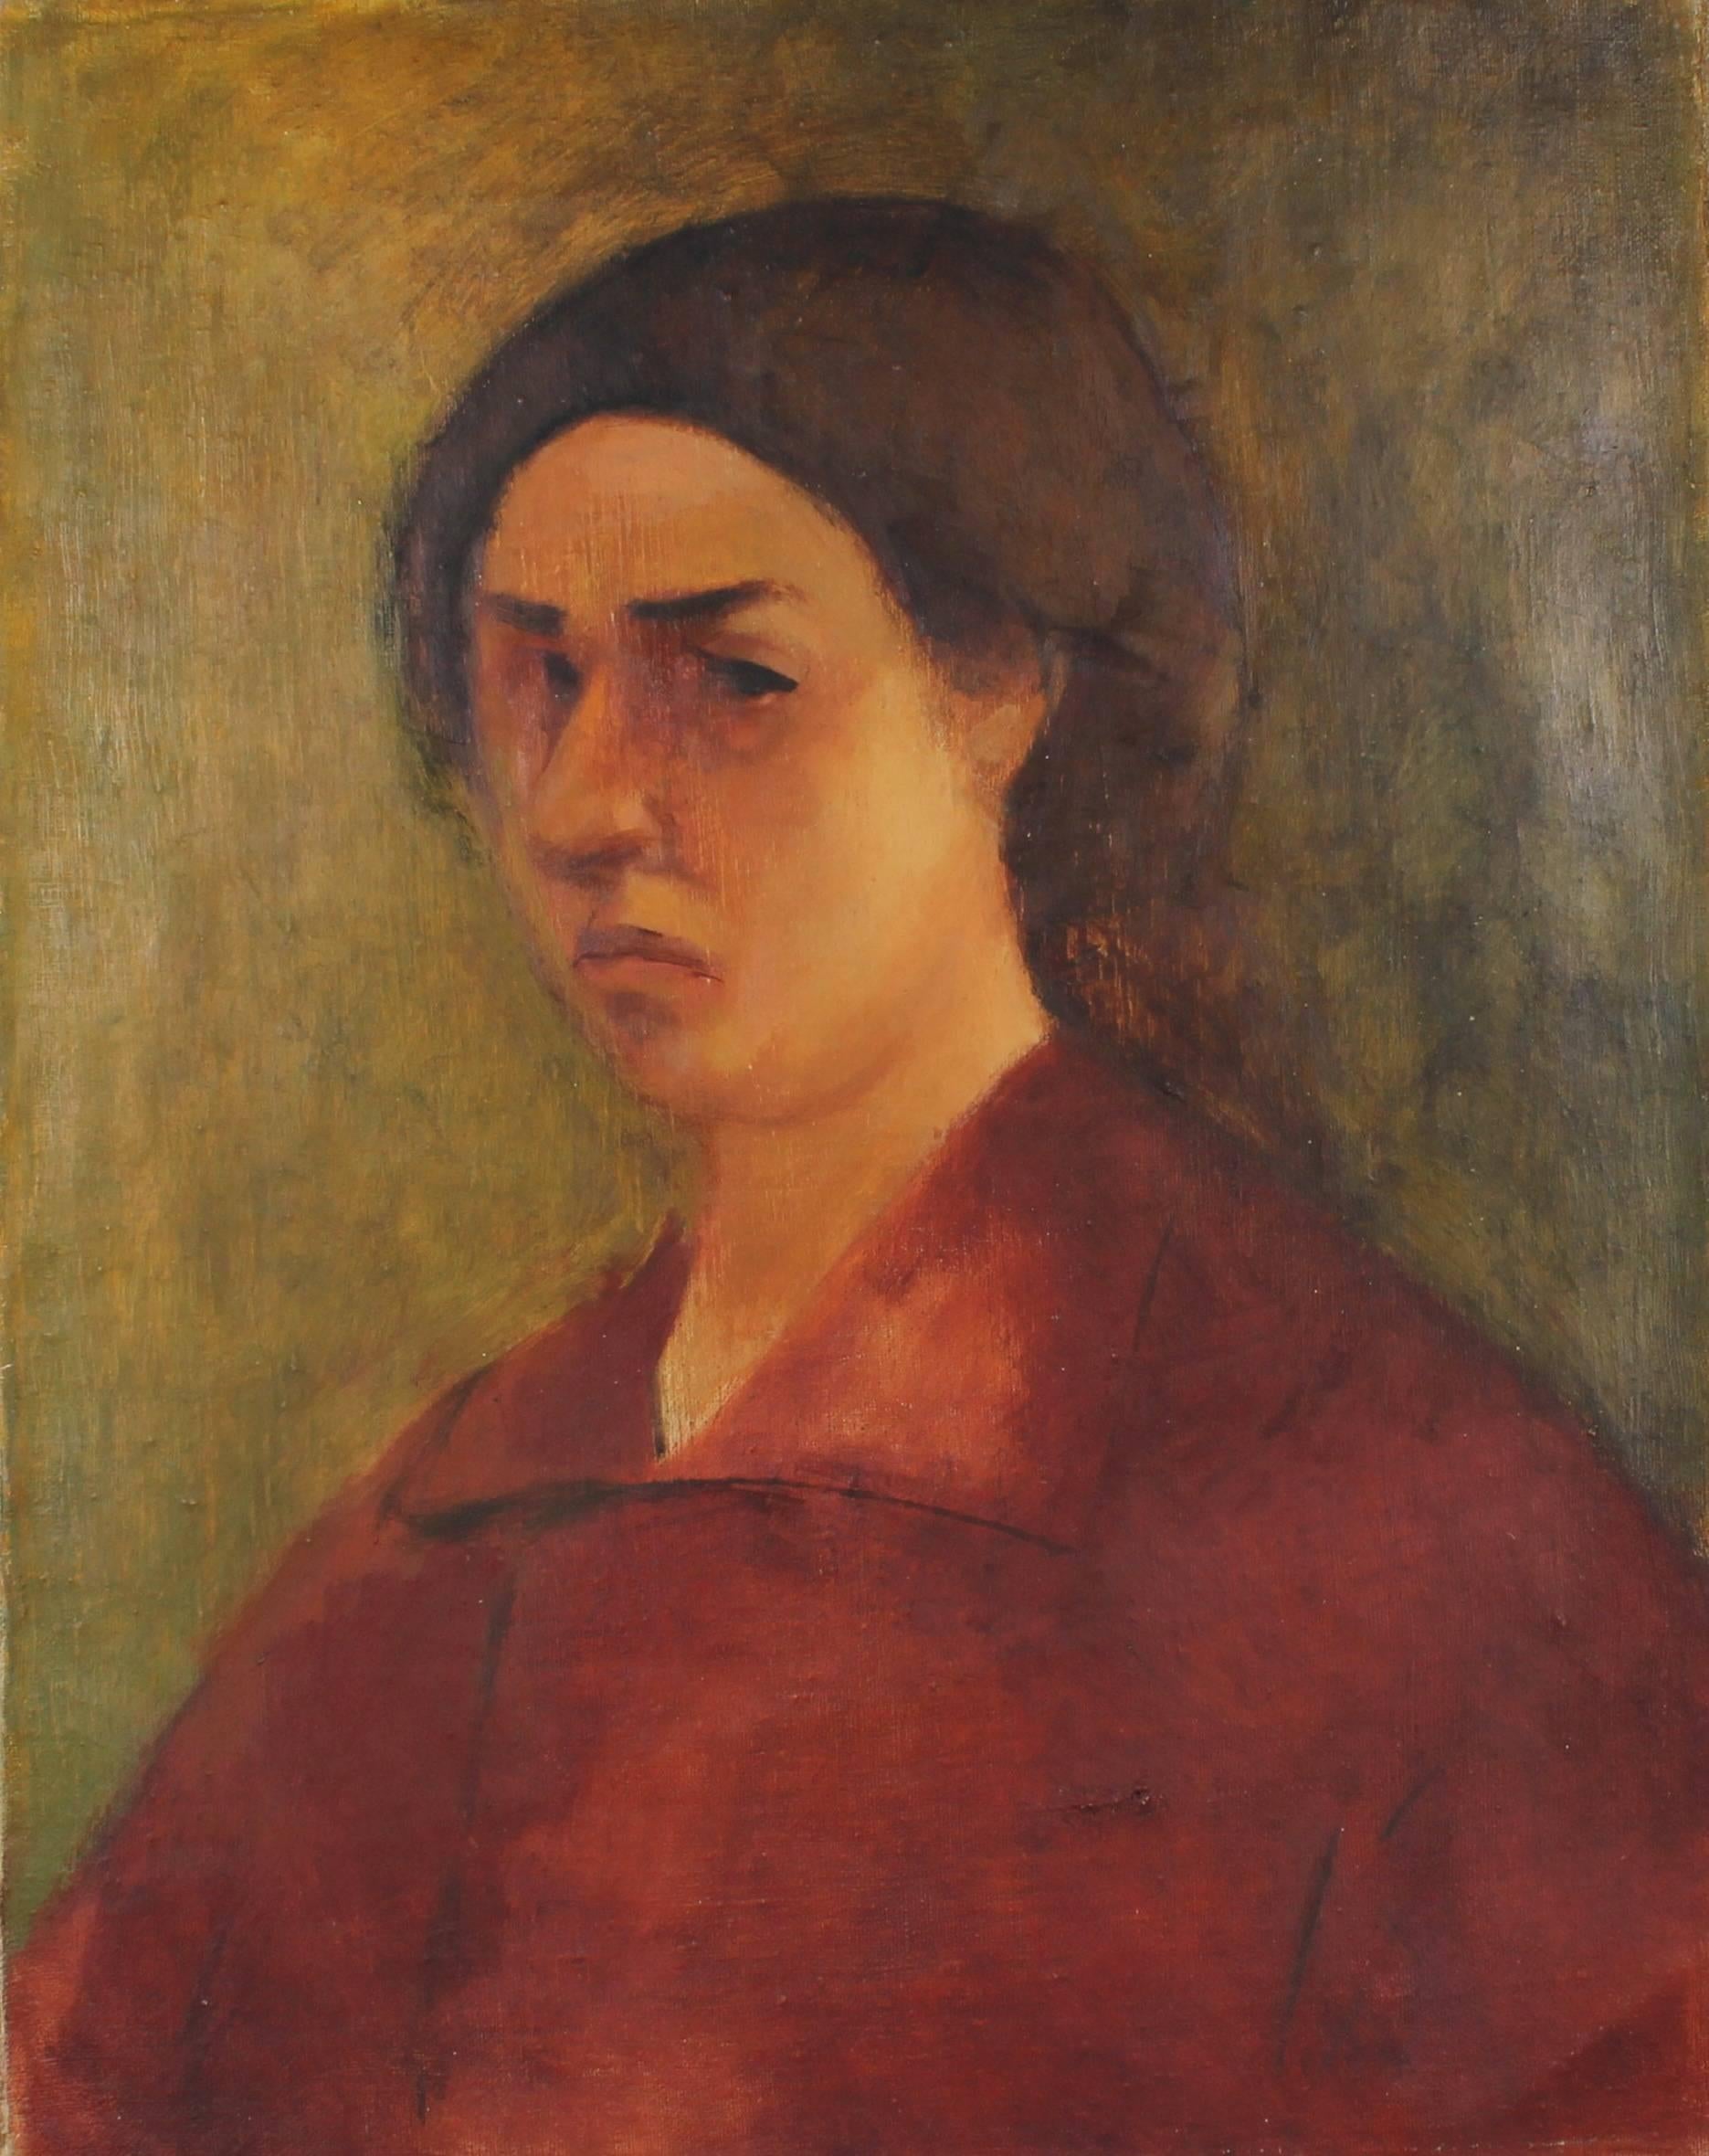 Martin Snipper Portrait Painting - Portrait of Ethel Weiner Guttman, Oil on Linen, Circa 1930s